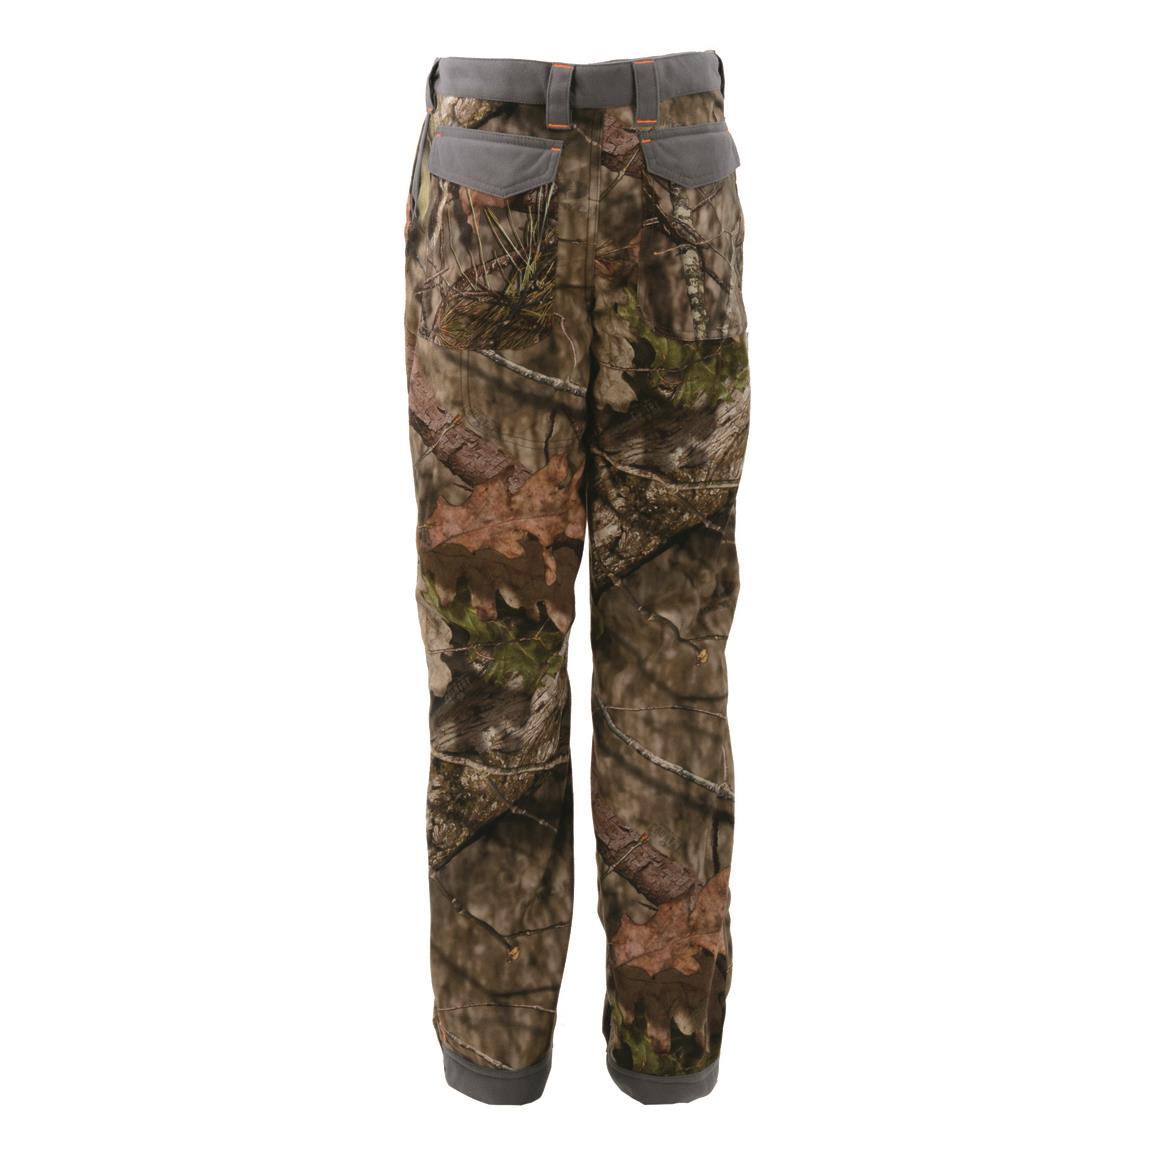 NOMAD Youth Harvester Hunting Pants - 716396, Kid's Hunting Clothing at ...